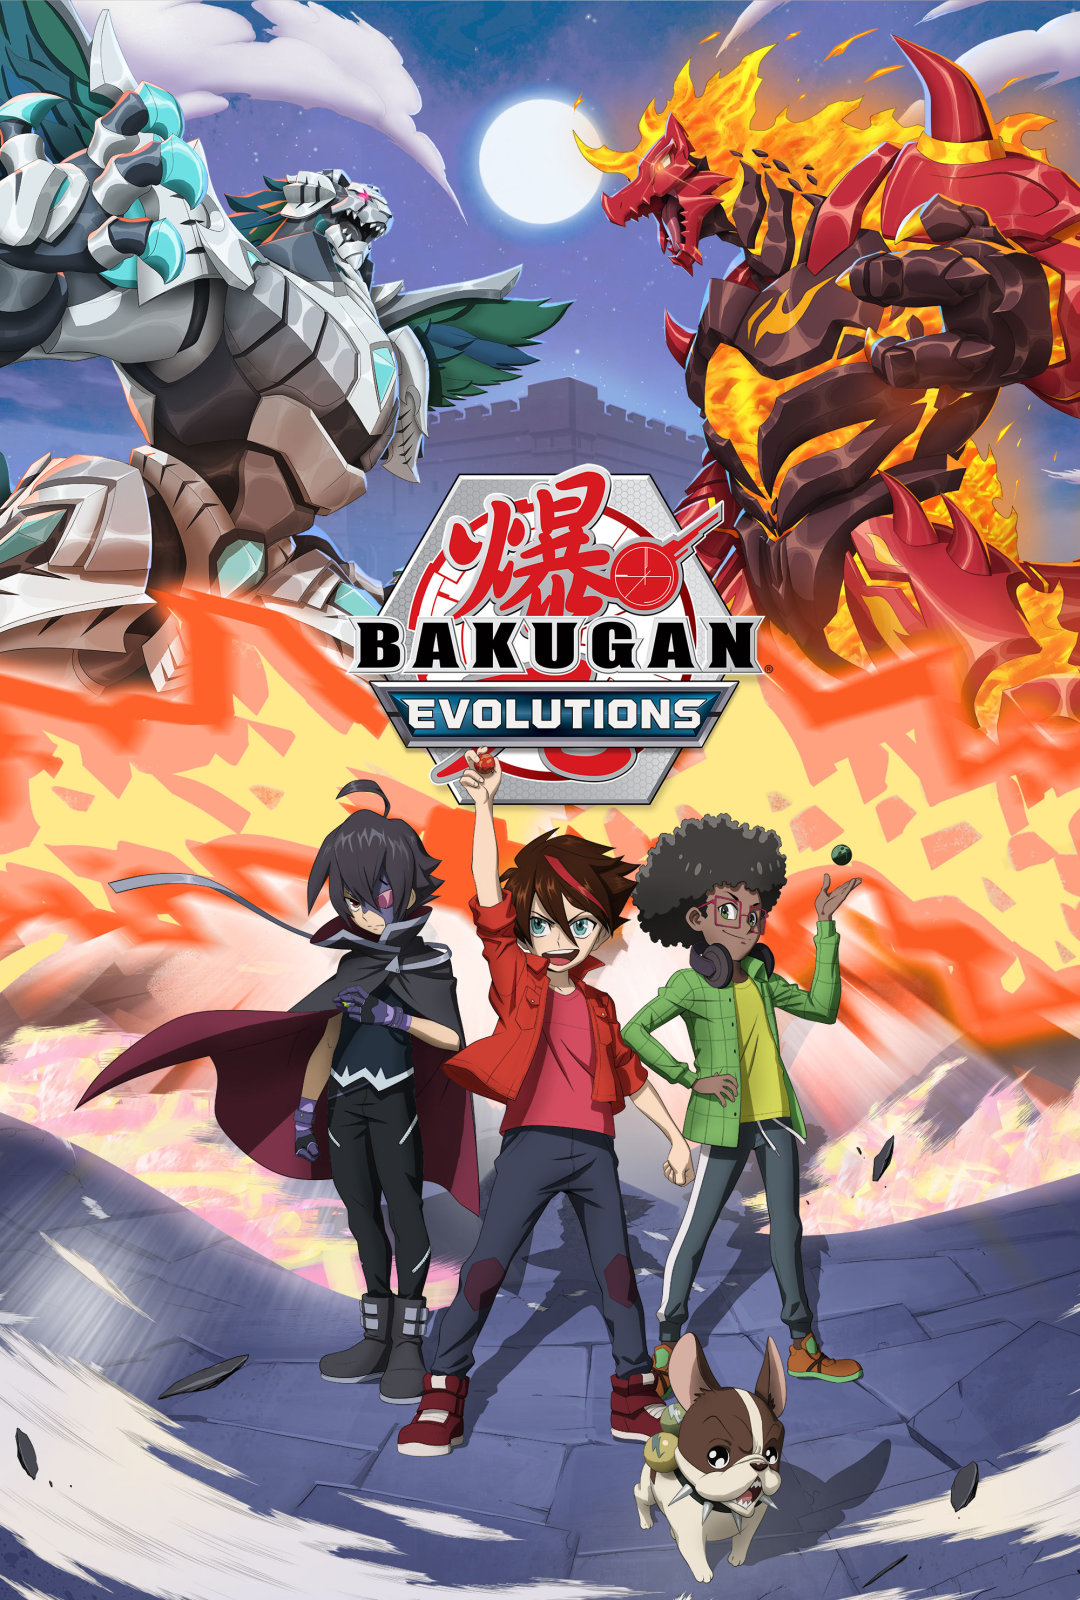 Netflix Releases Bakugan Legends Anime!